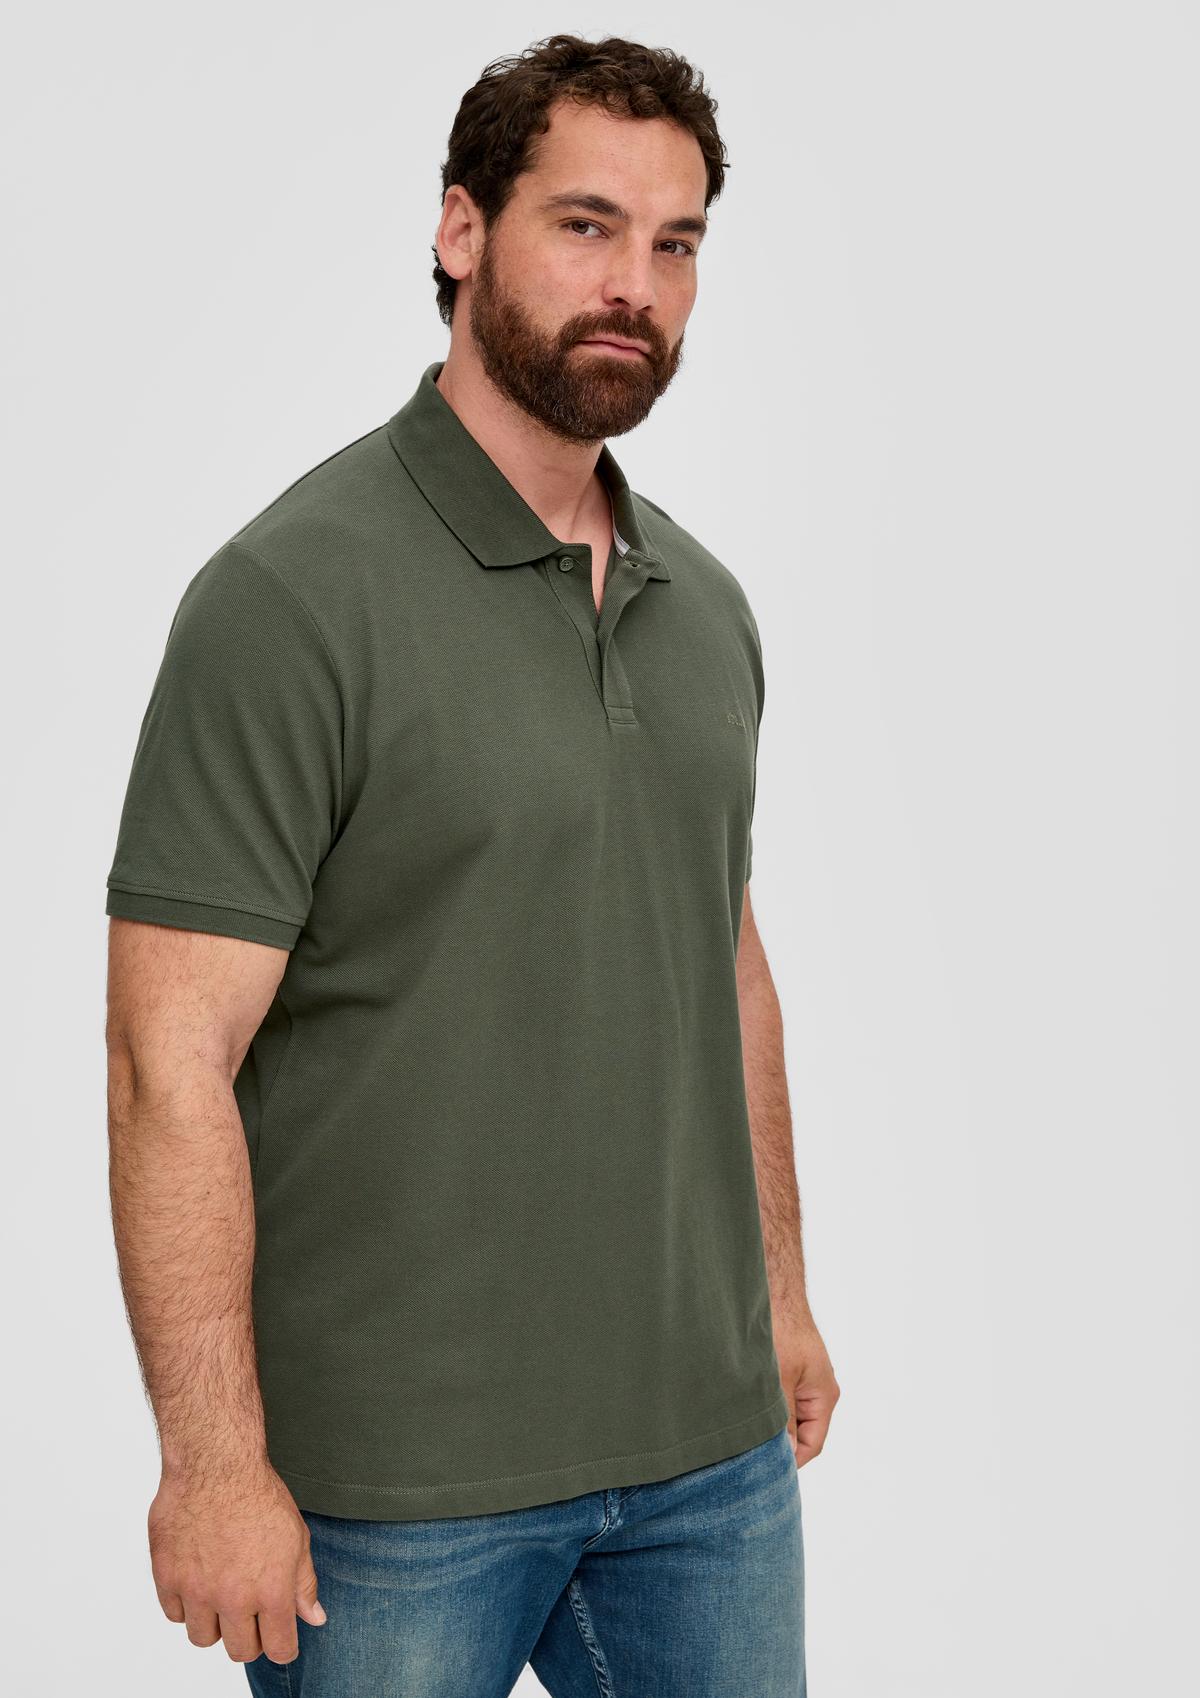 navy shirt Polo print a minimalist - with